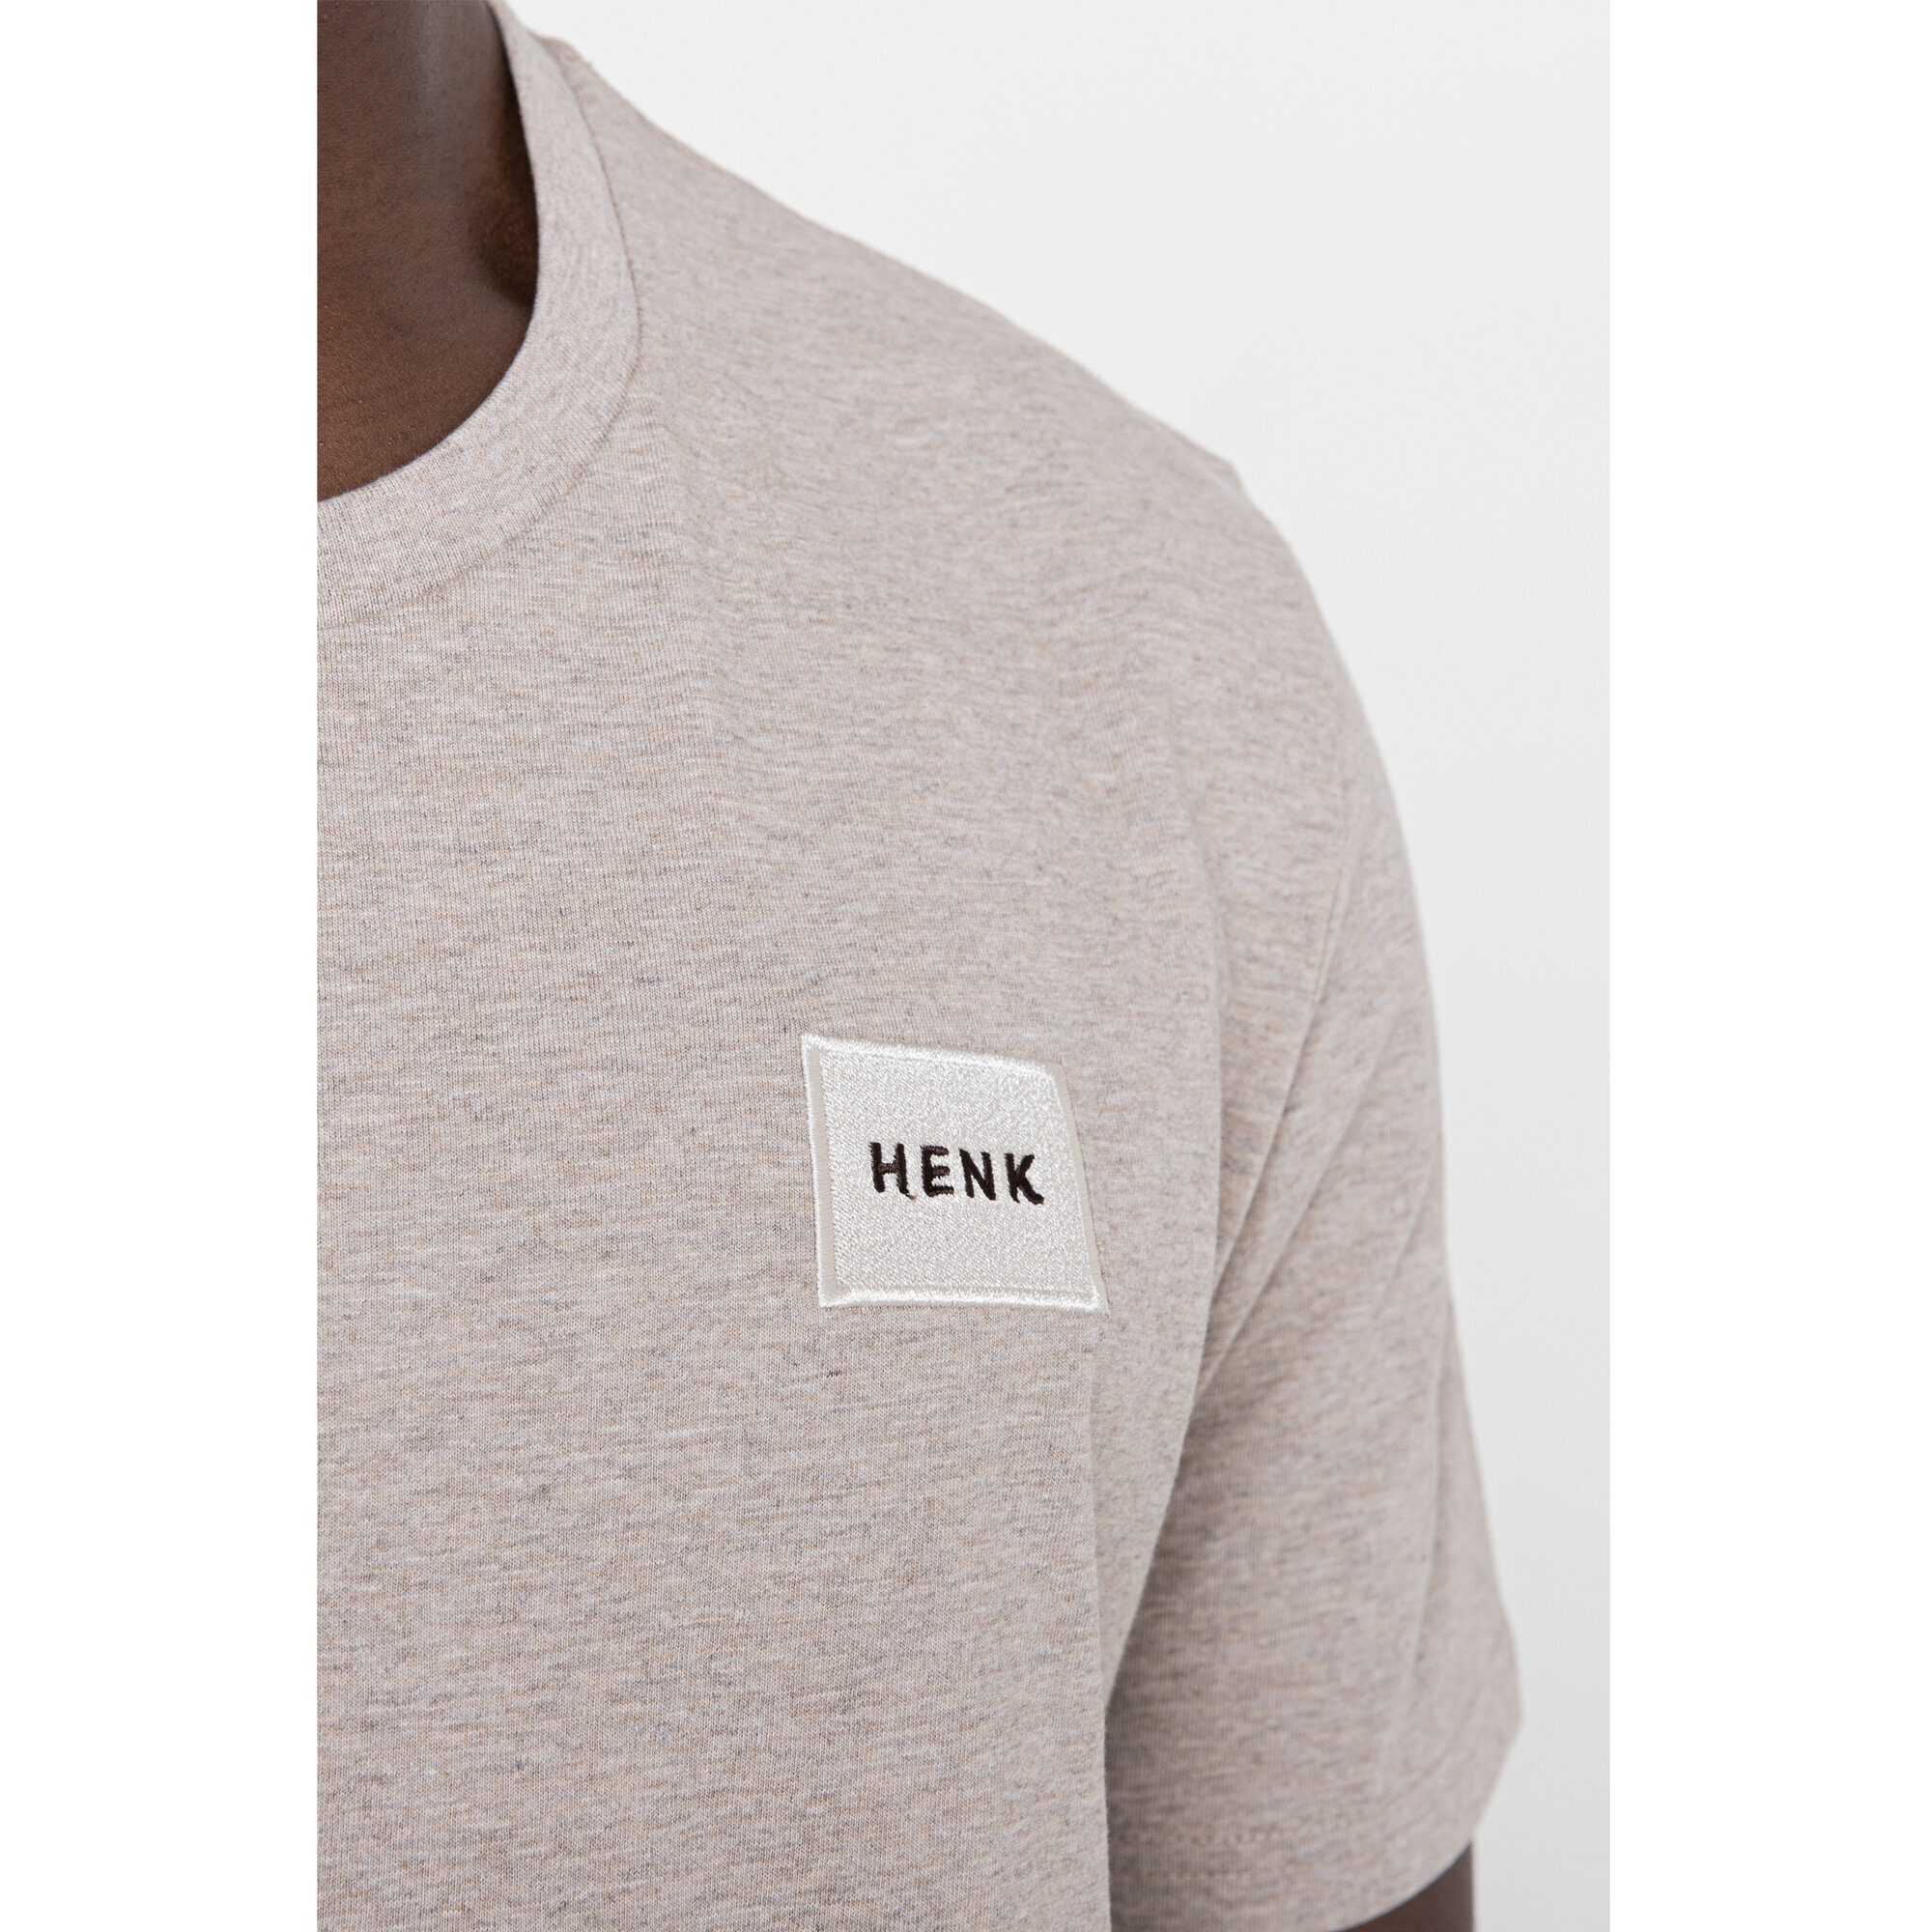 T-shirt | Beige Melange | Studio HENK | Setting5